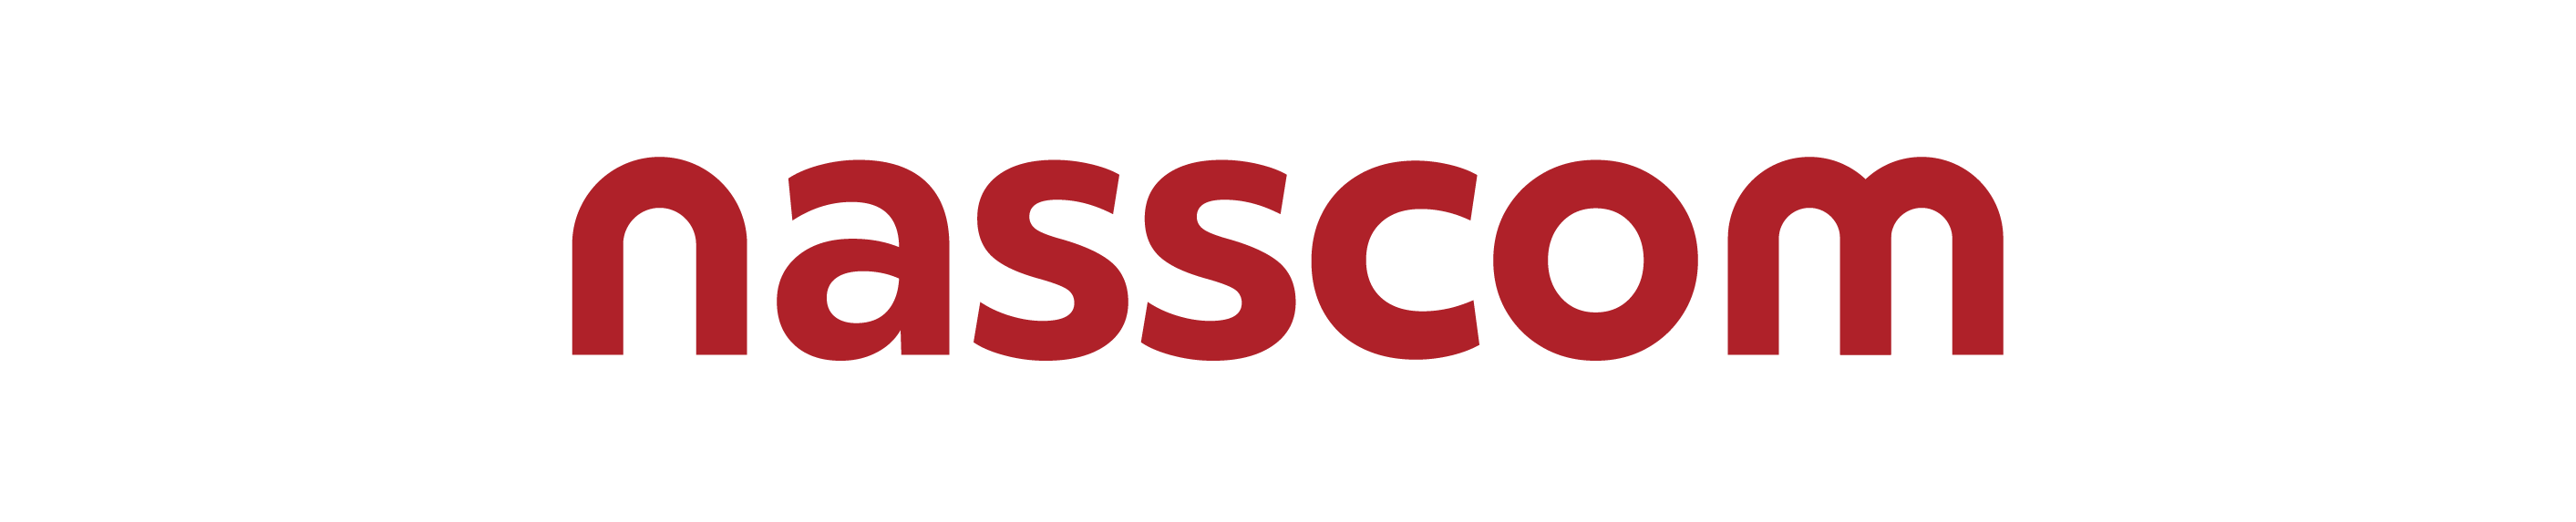 Nasscom_New_Logo-03